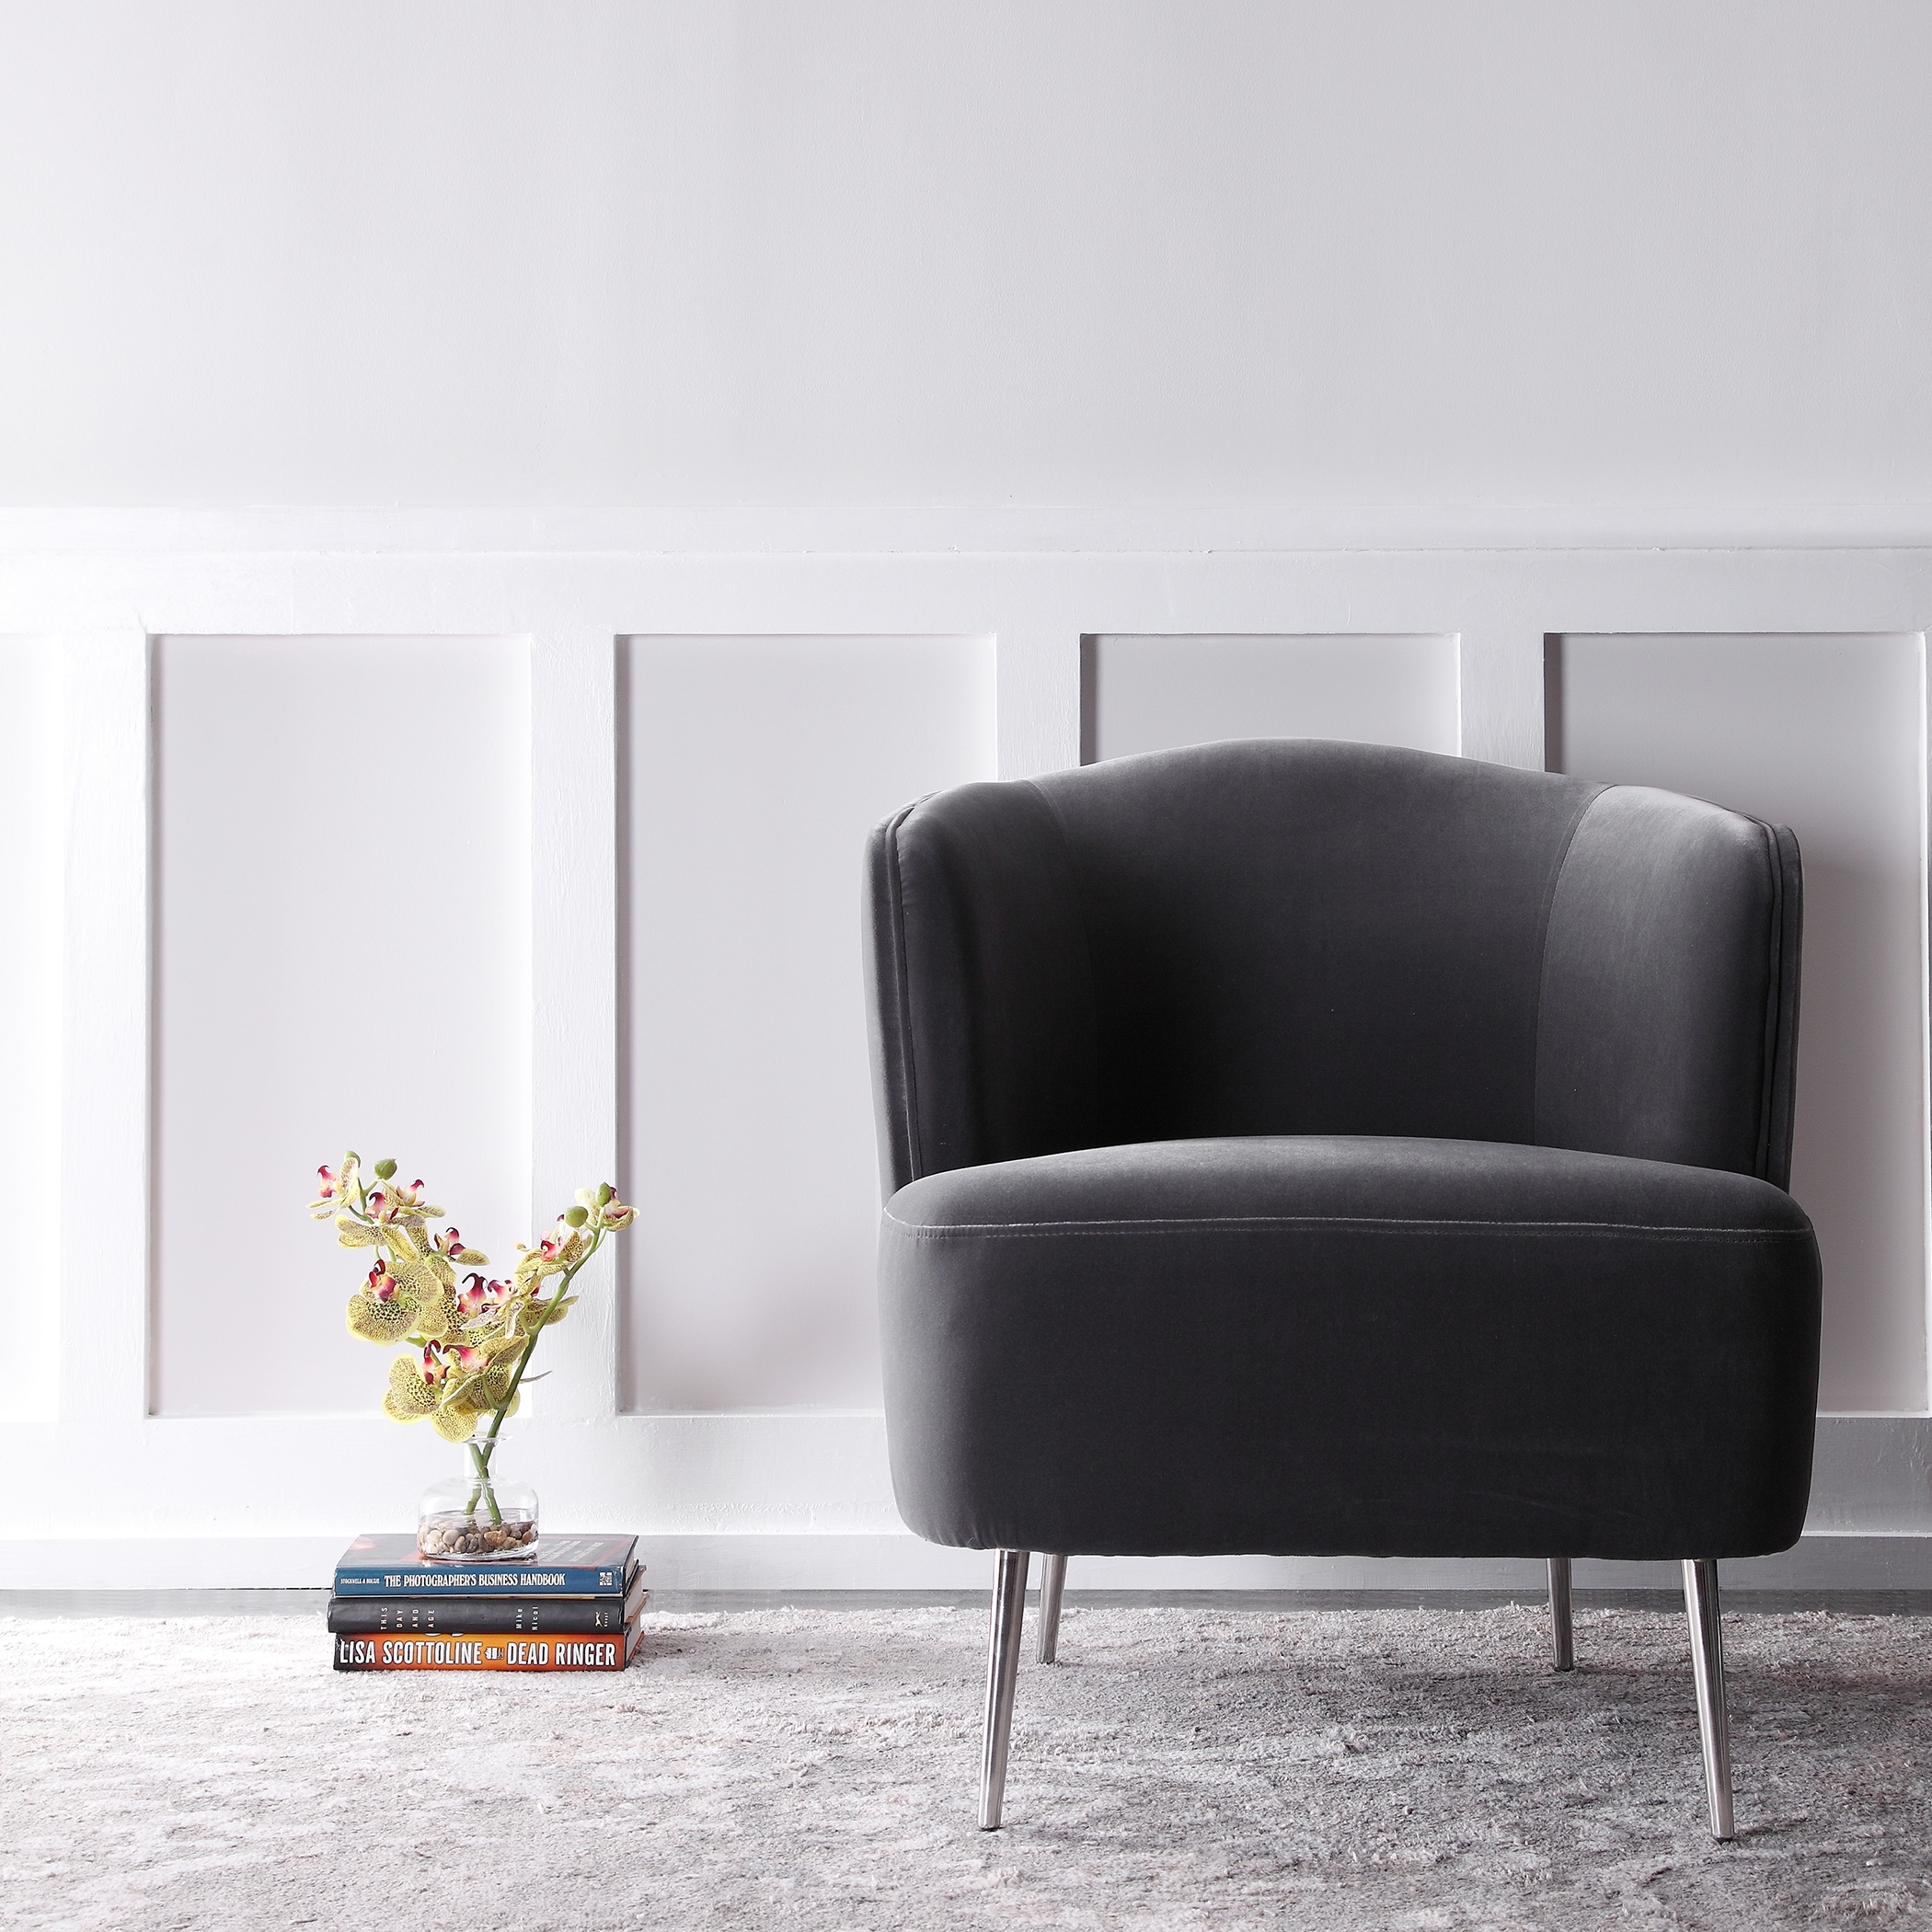 Alboran Gray Accent Chair - Image 3